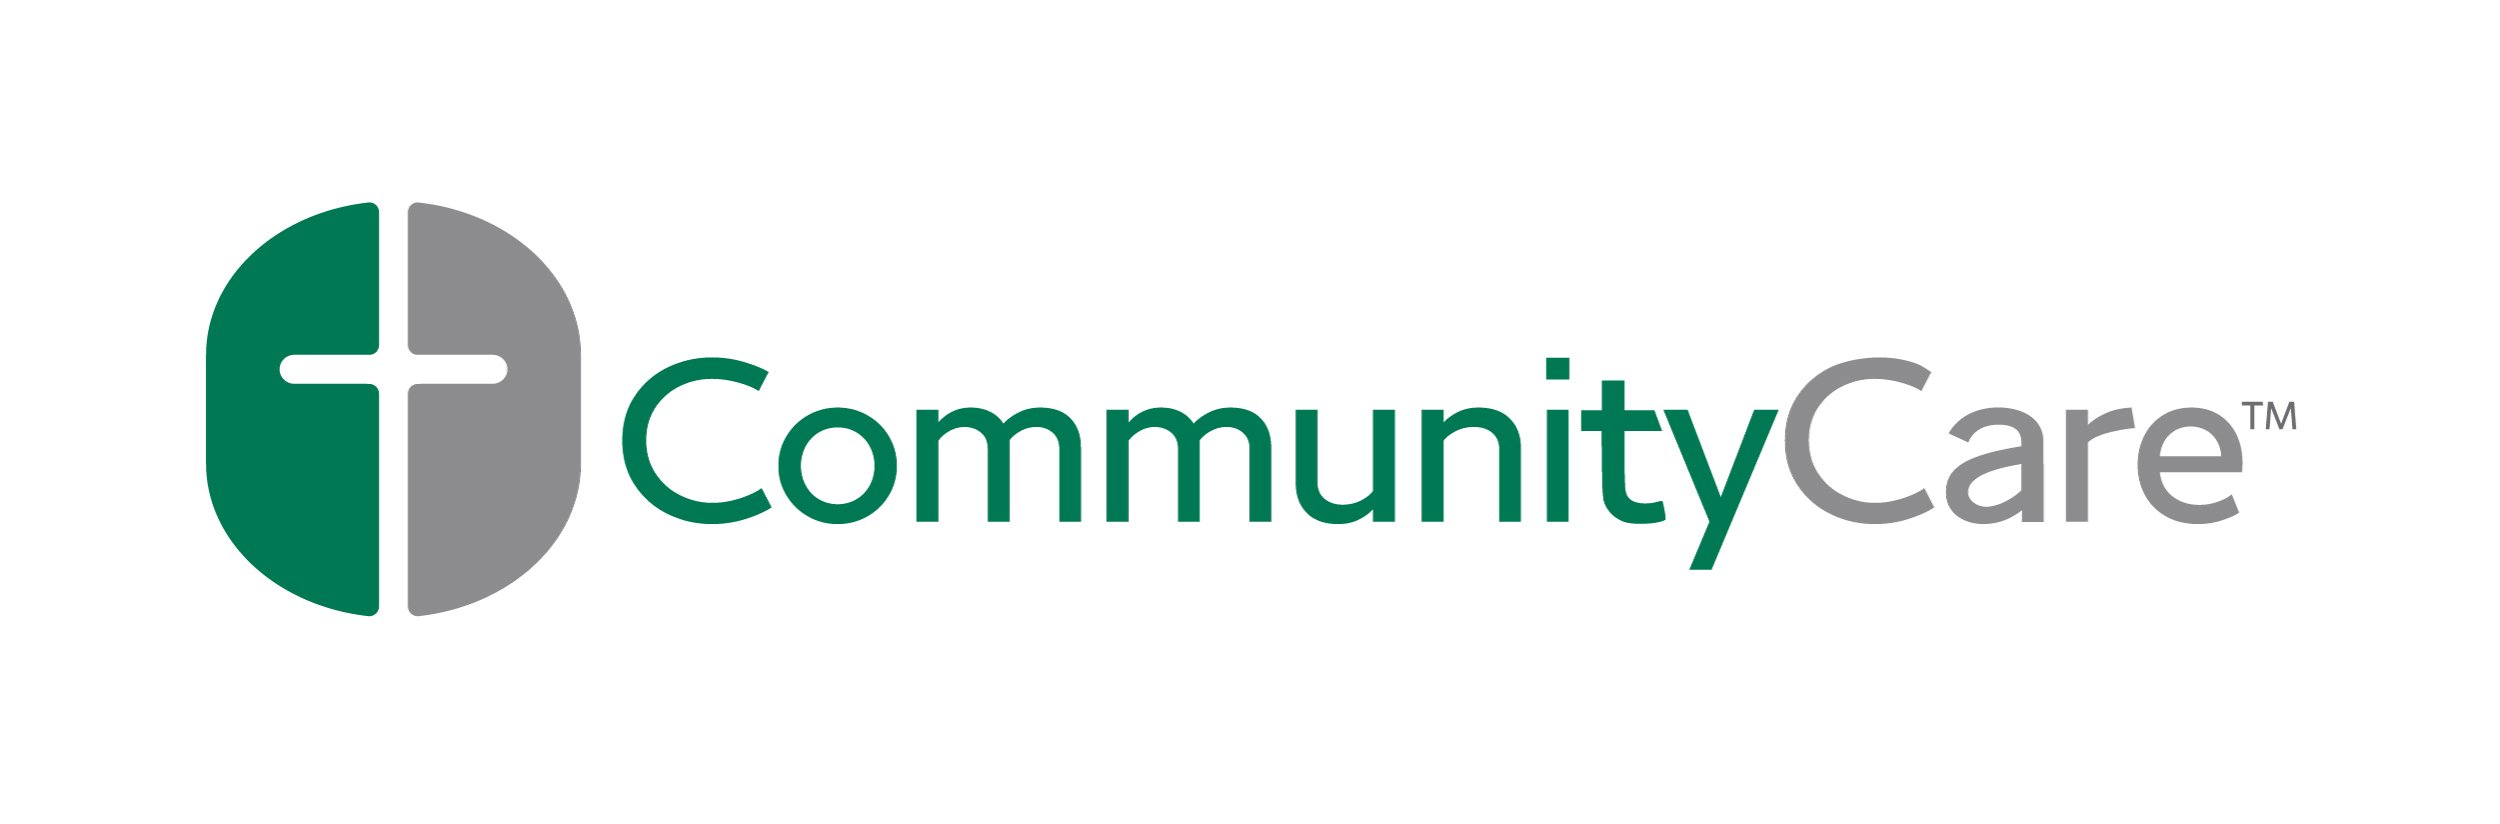 CommunityCare Logo.jpg